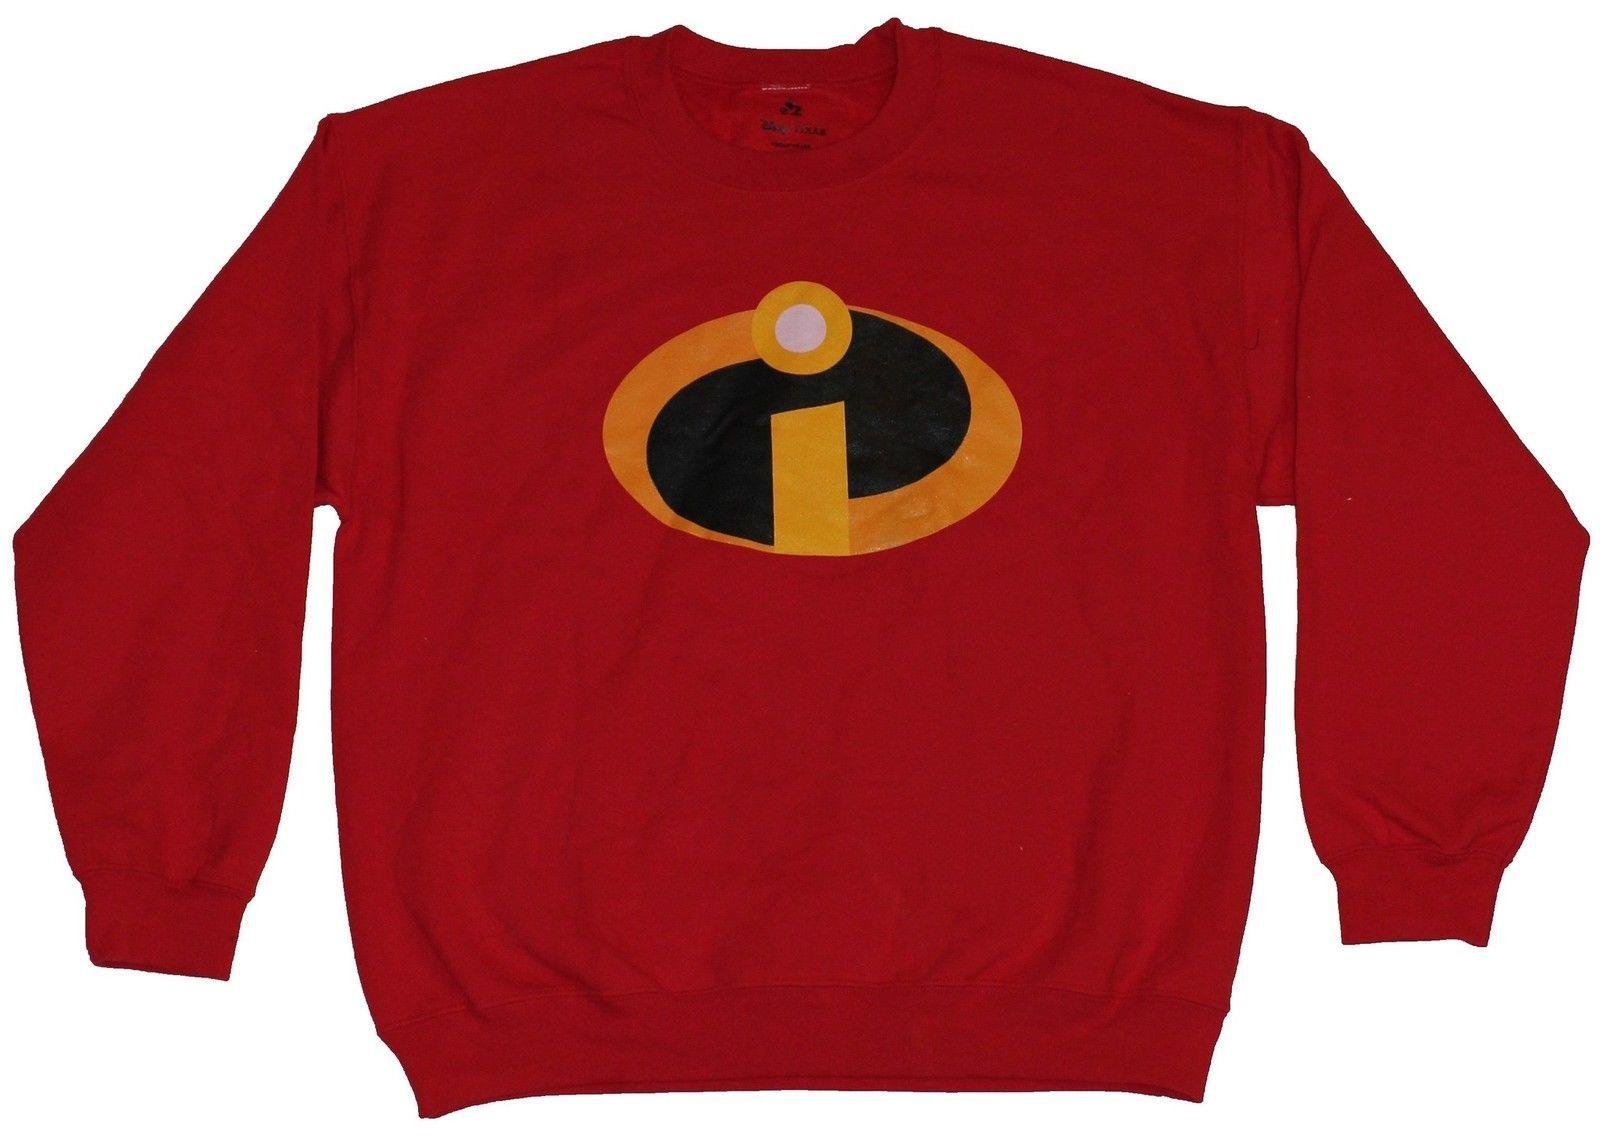 Yellow Swirl Logo - The Incredibles (Pixar) Mens Crewneck Sweatshirt Swirl I